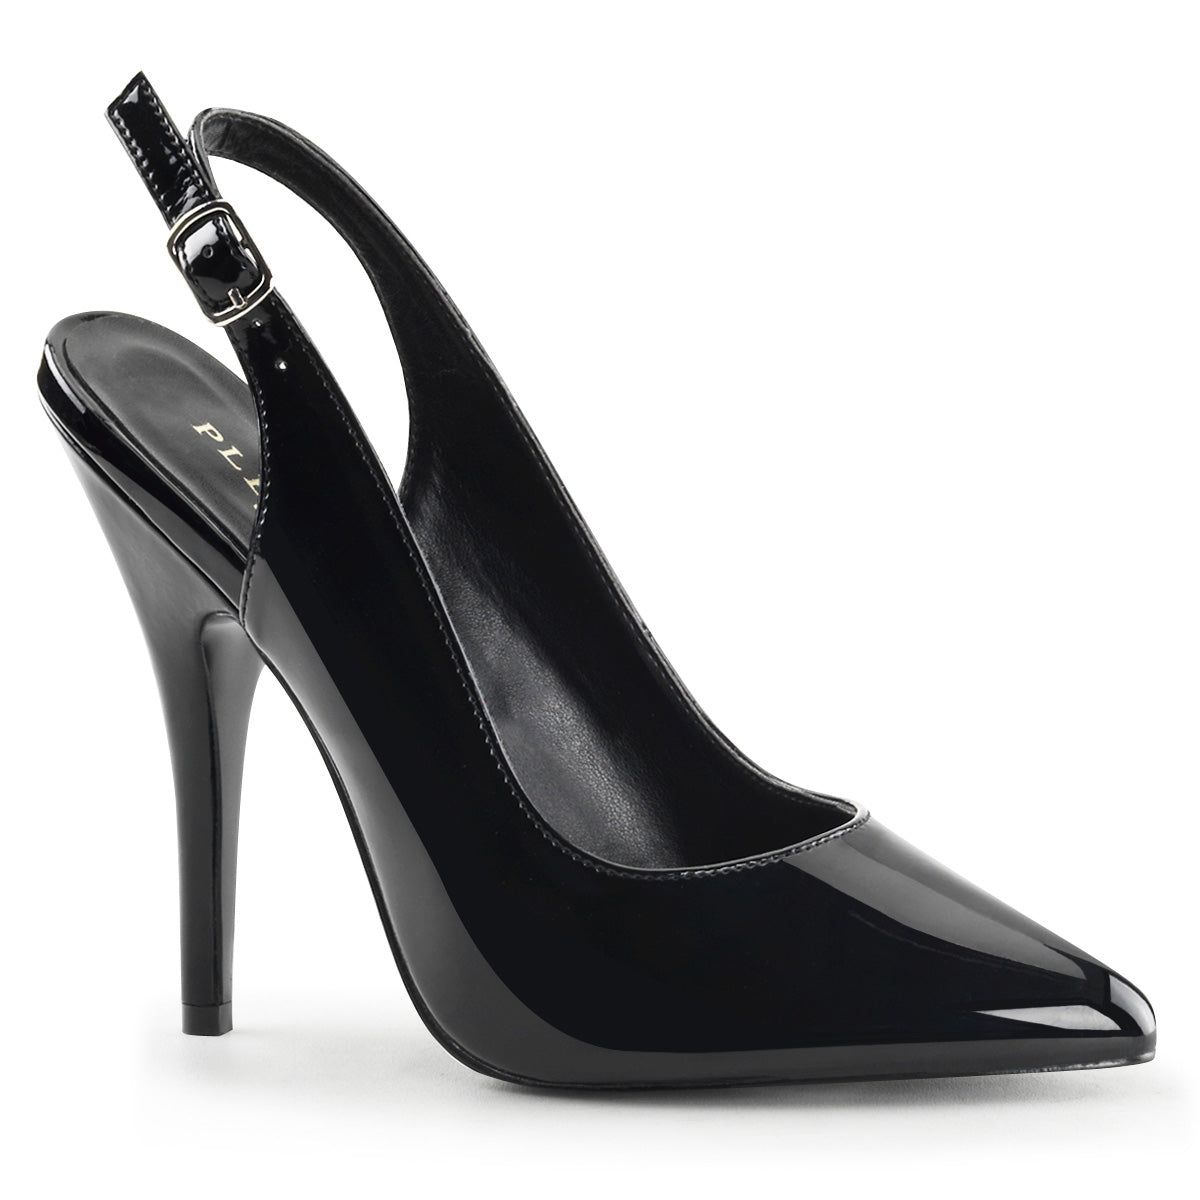 SEDUCE-317 Pleasers Shoe 5" Heel Black Patent Fetish Footwear